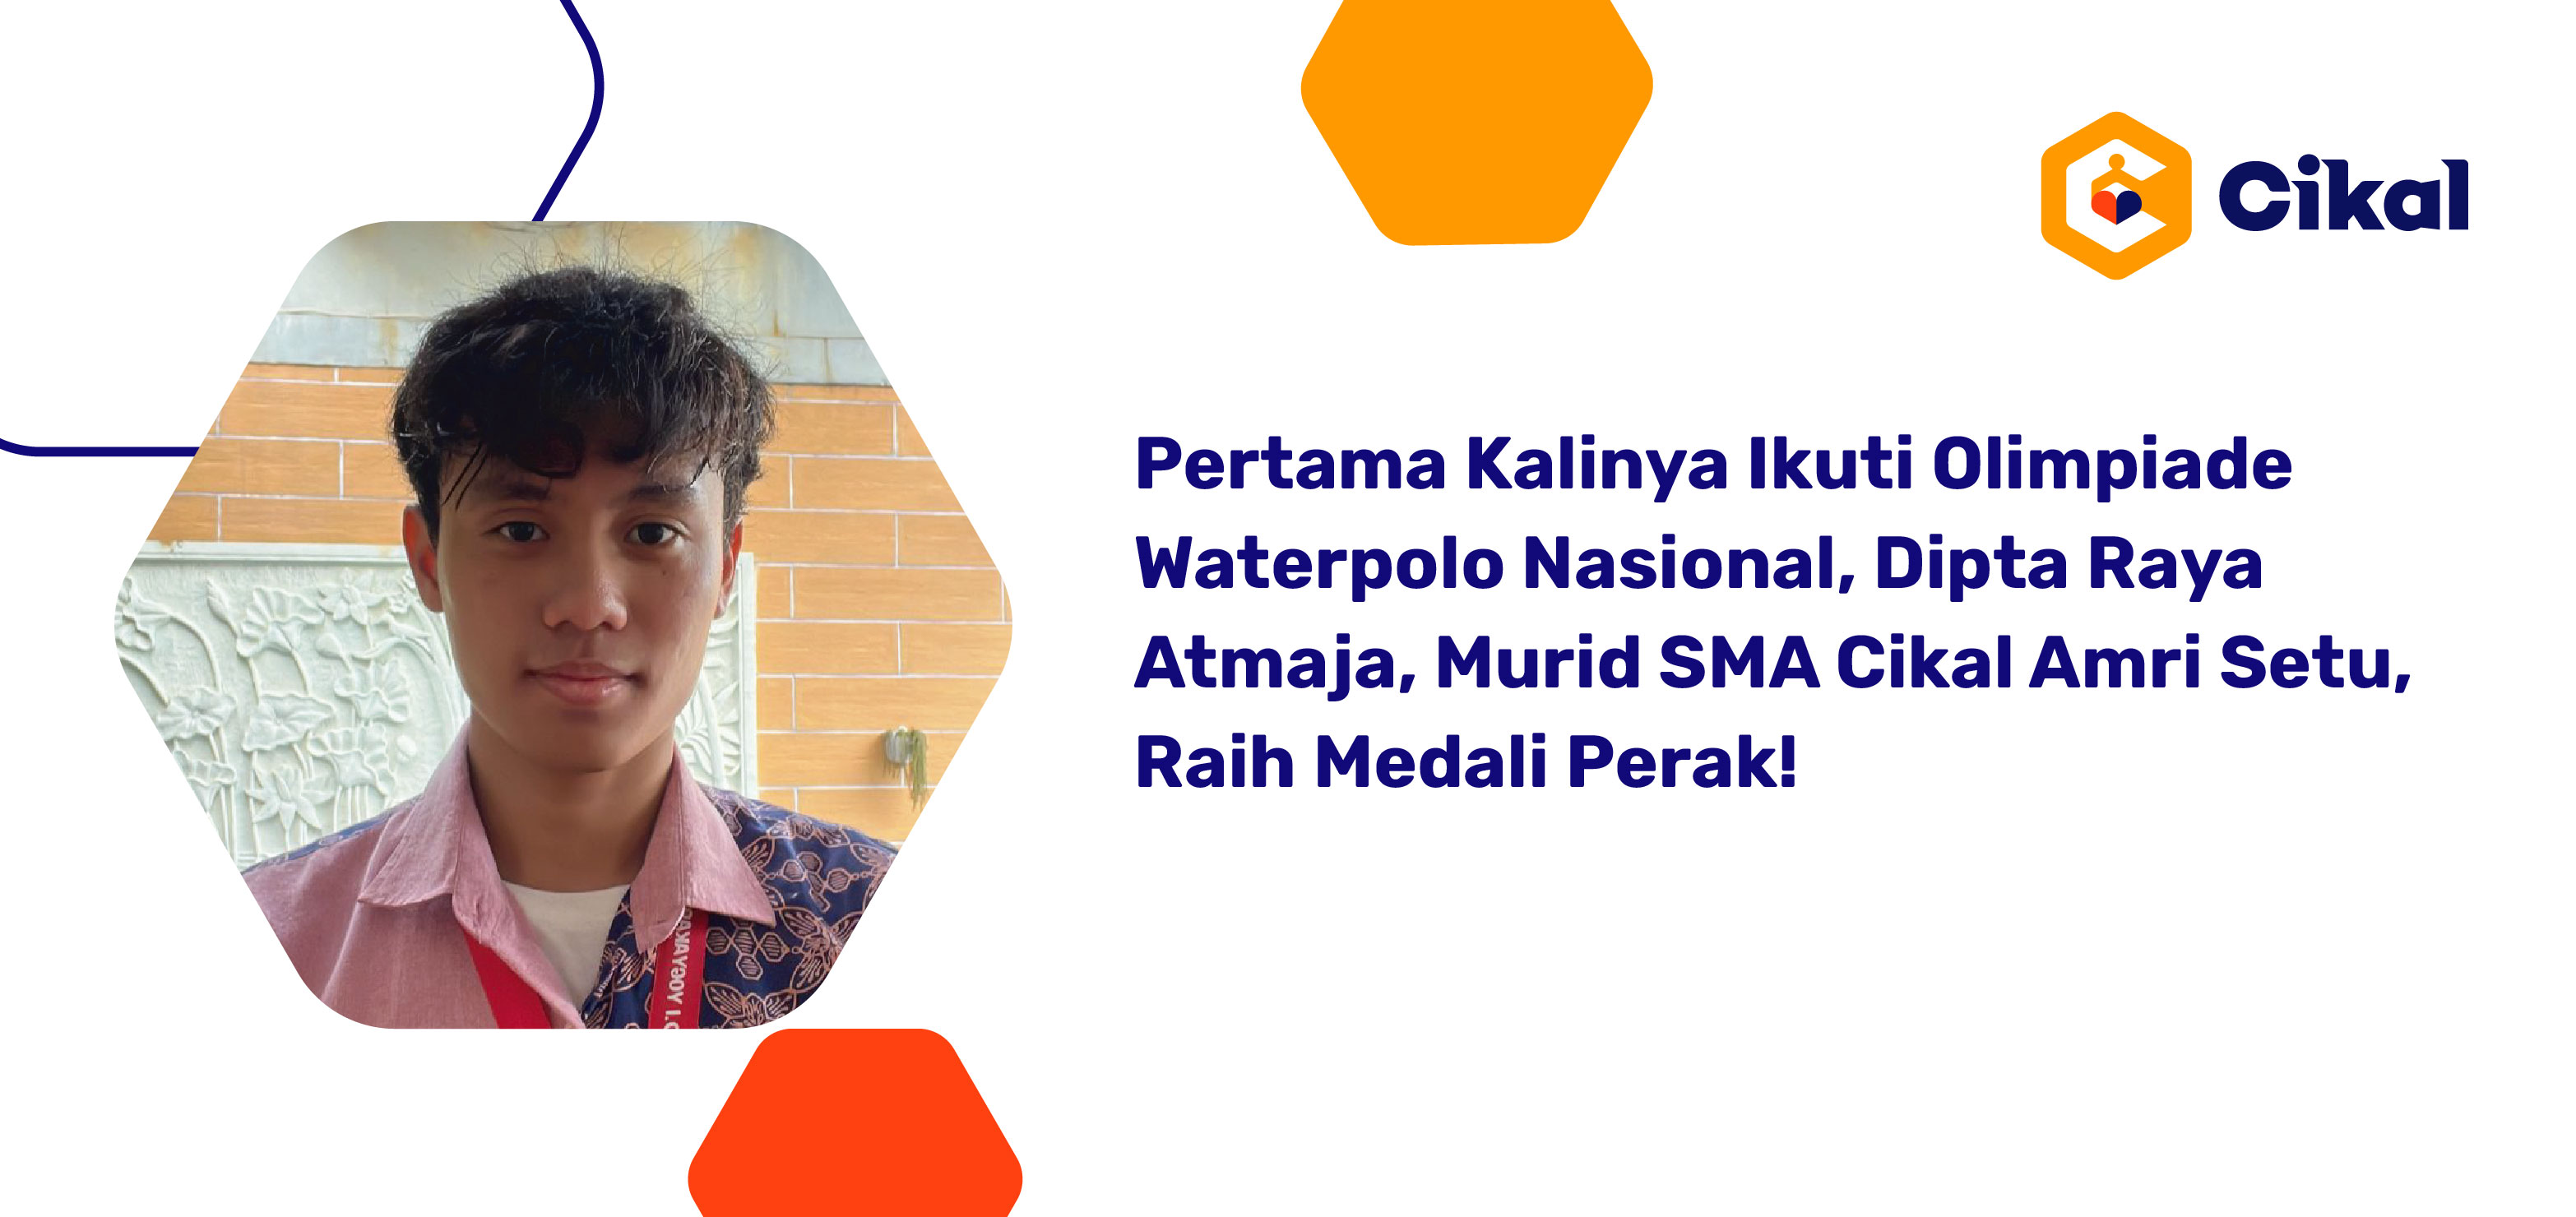 Pertama Kalinya Ikuti Olimpiade Waterpolo Nasional, Dipt Raya Atmaja, Murid SMA Cikal Amri Setu, Raih Medali Perak!